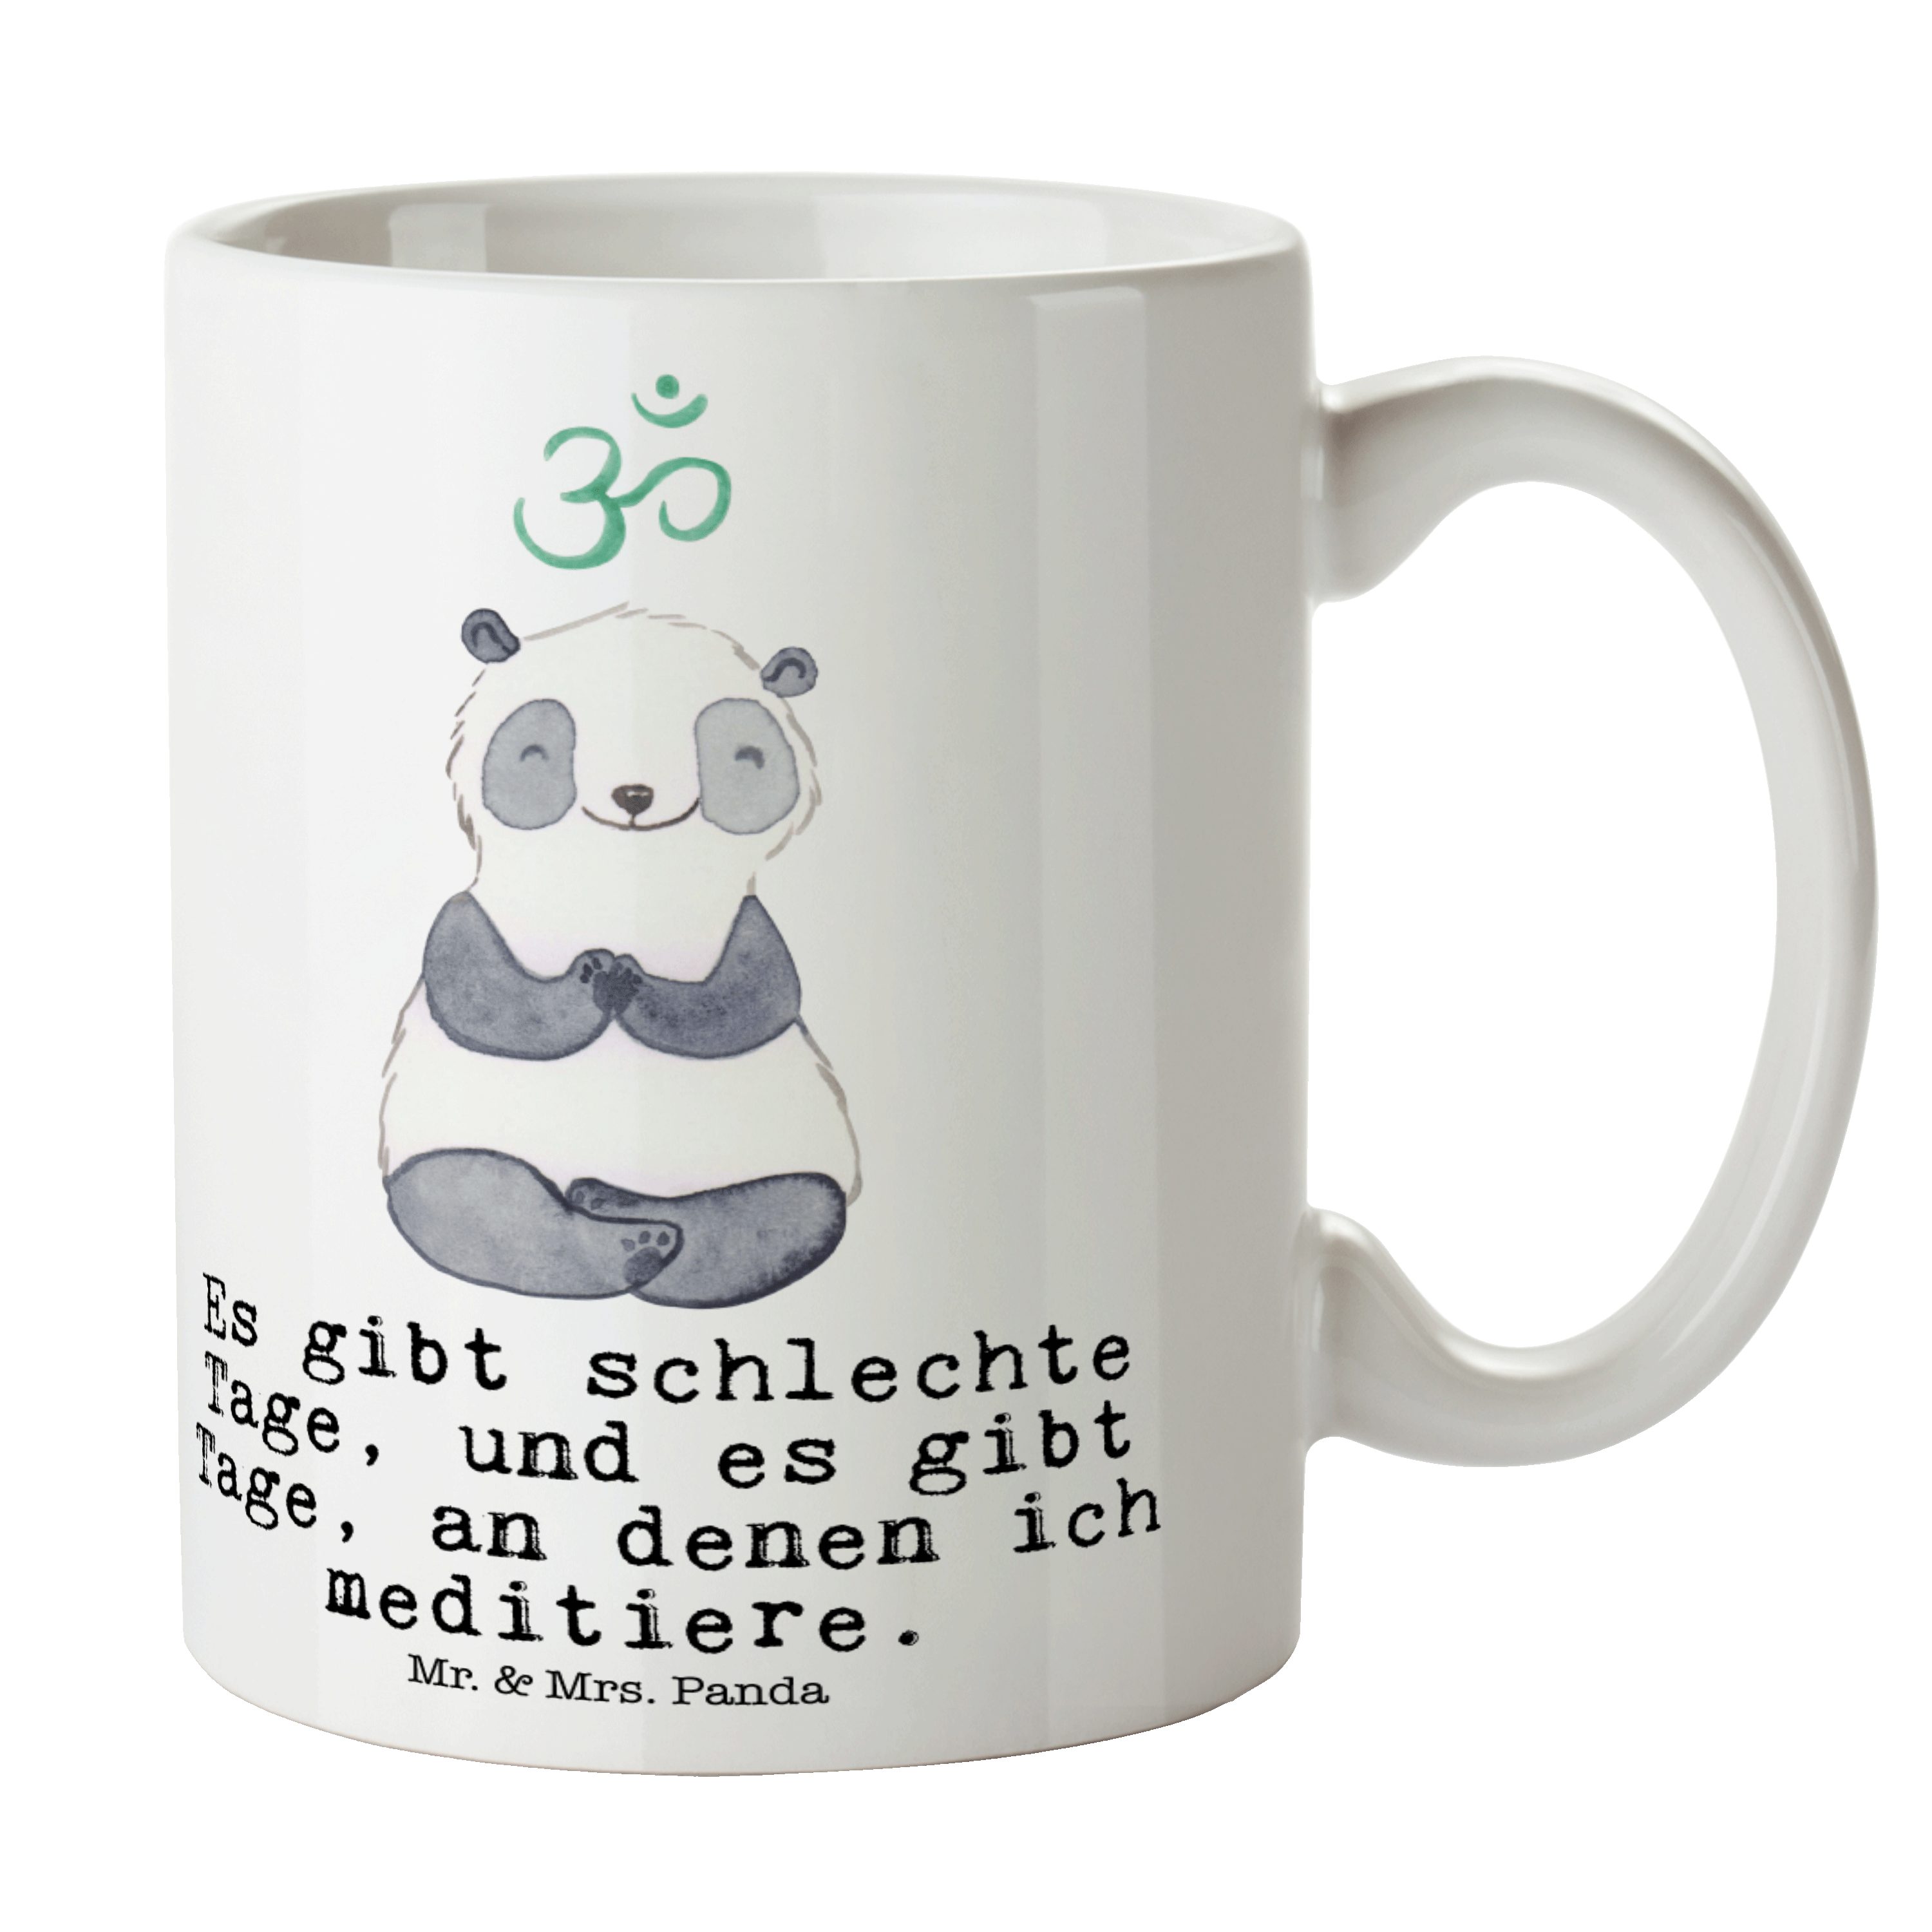 Mr. & Mrs. Panda Tasse Panda Meditieren Tage - Weiß - Geschenk, Kaffeebecher, Teetasse, Dank, Keramik